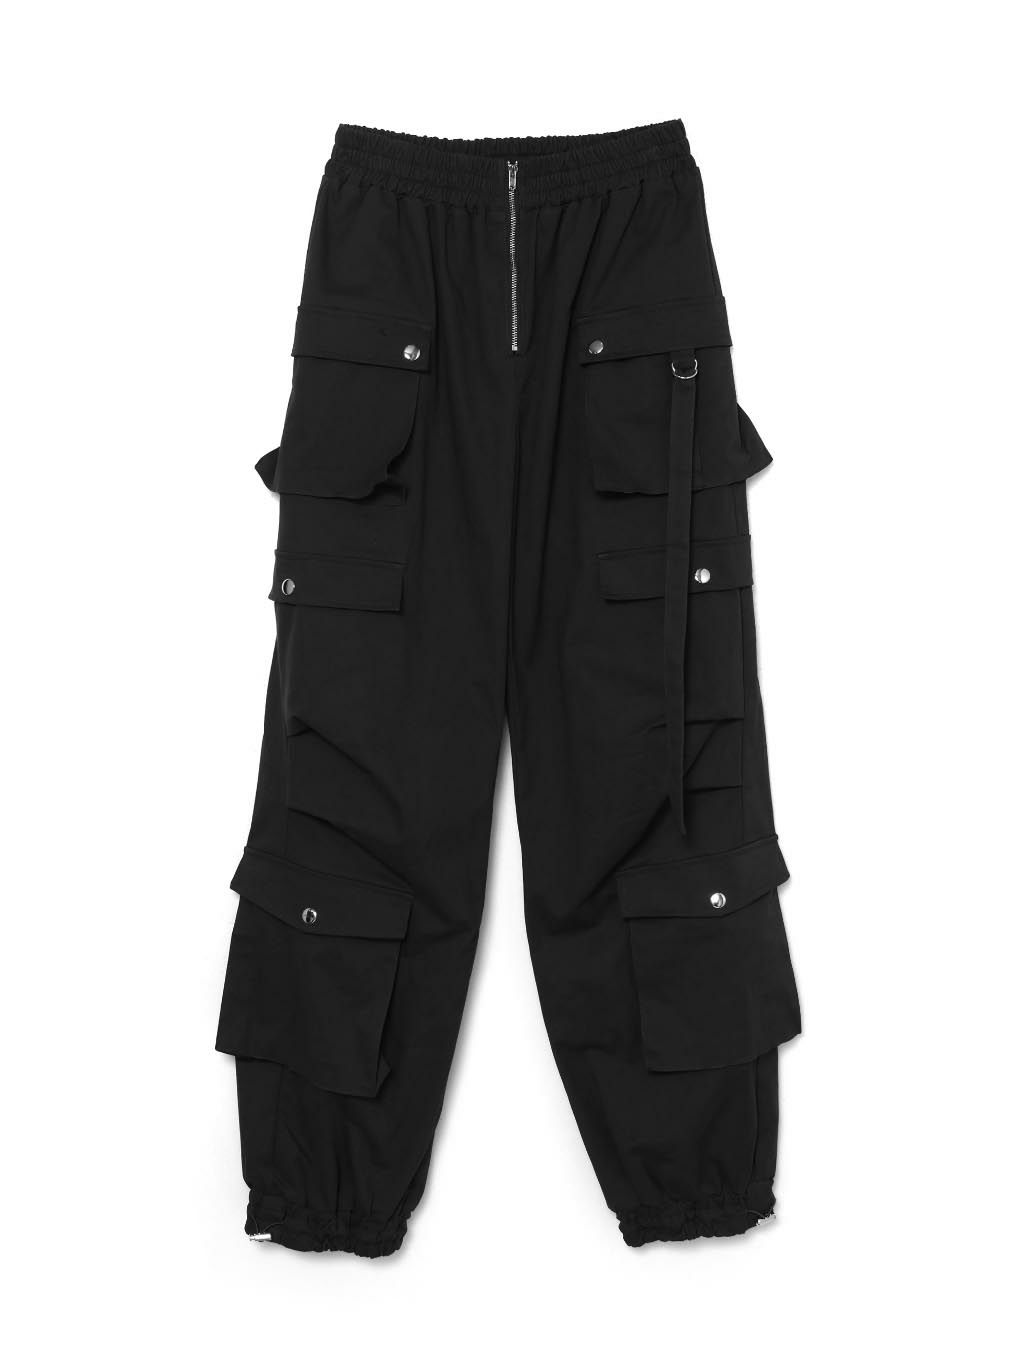 ODIZLI Women Baggy Cargo Pants with Pocket Y2k High Waist Hip Hop